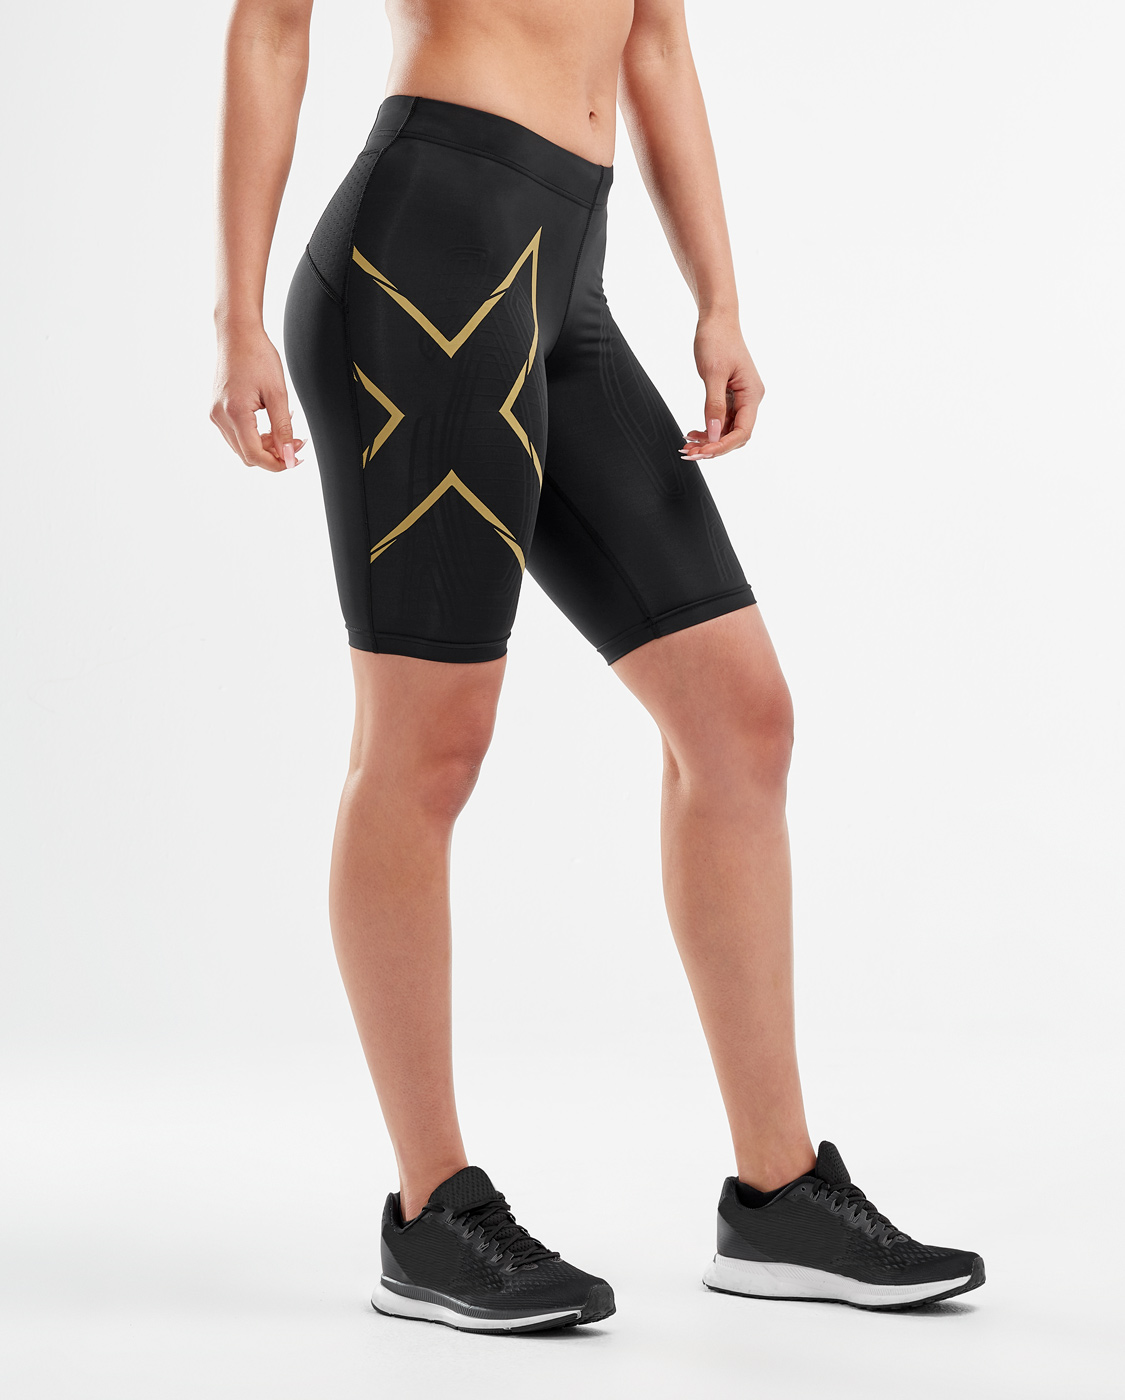 2XU Women's MCS Run Shorts - Black/Gold Reflective